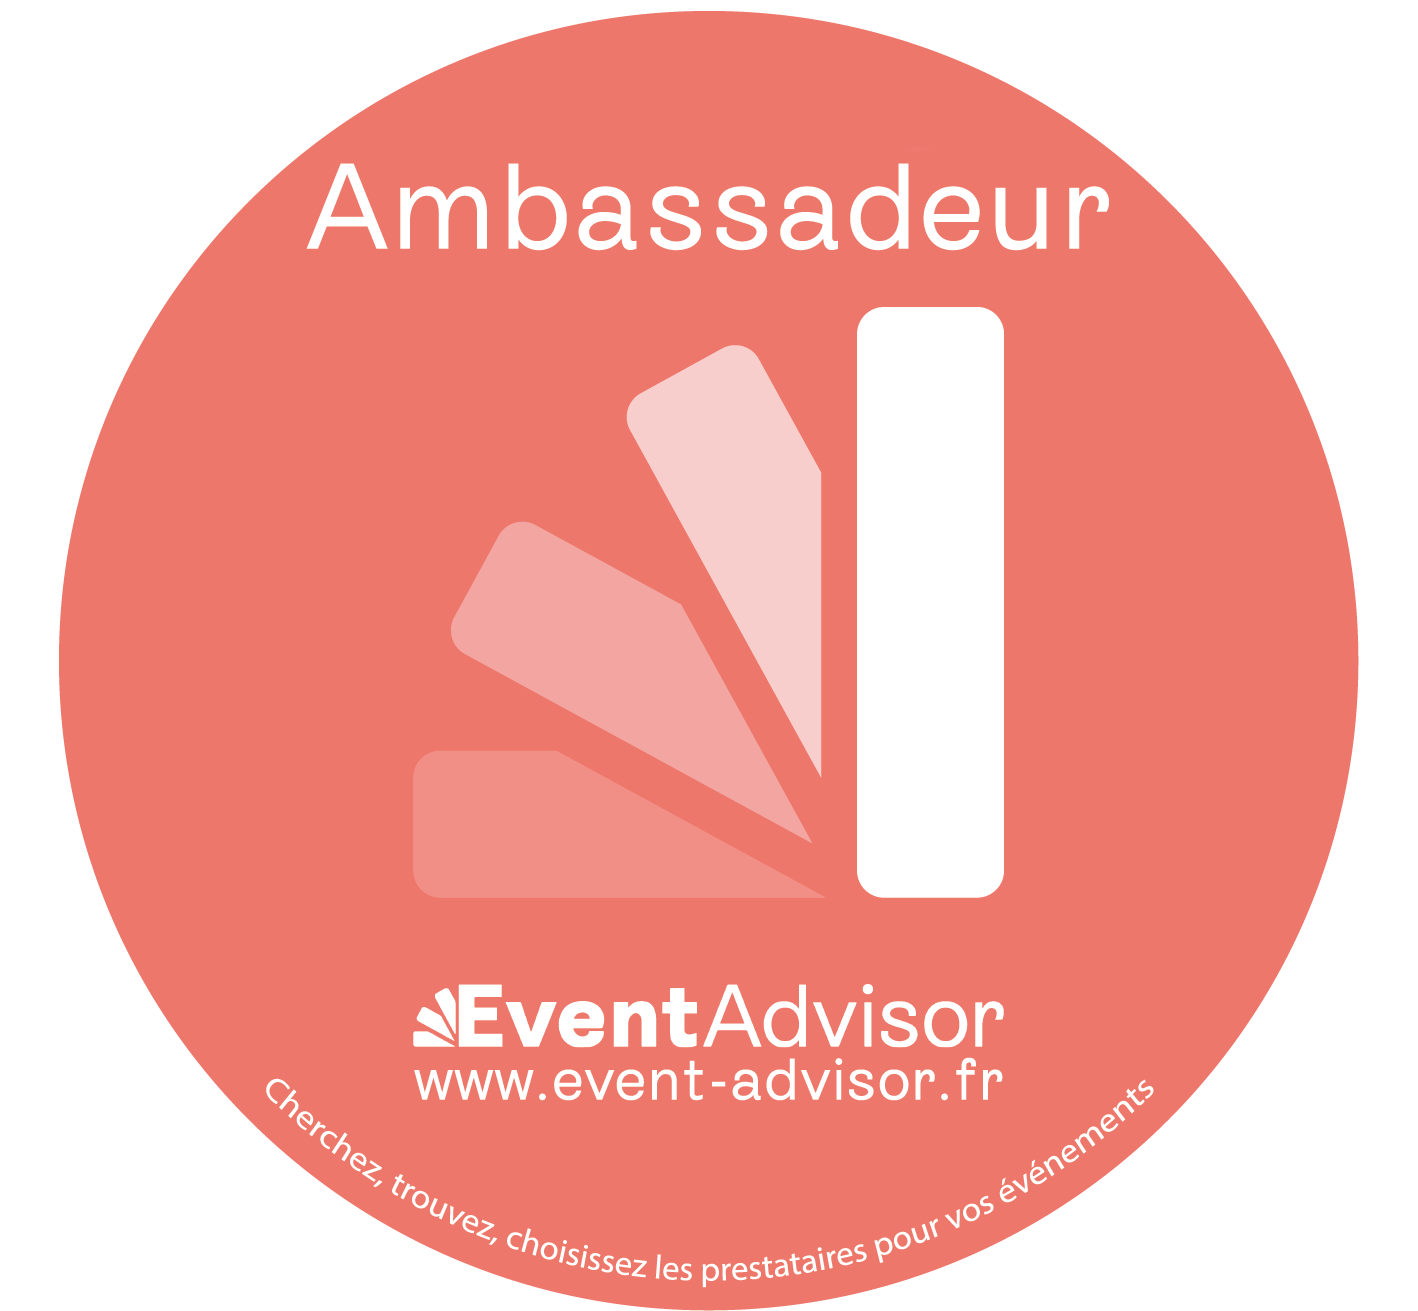 EventAdvisor